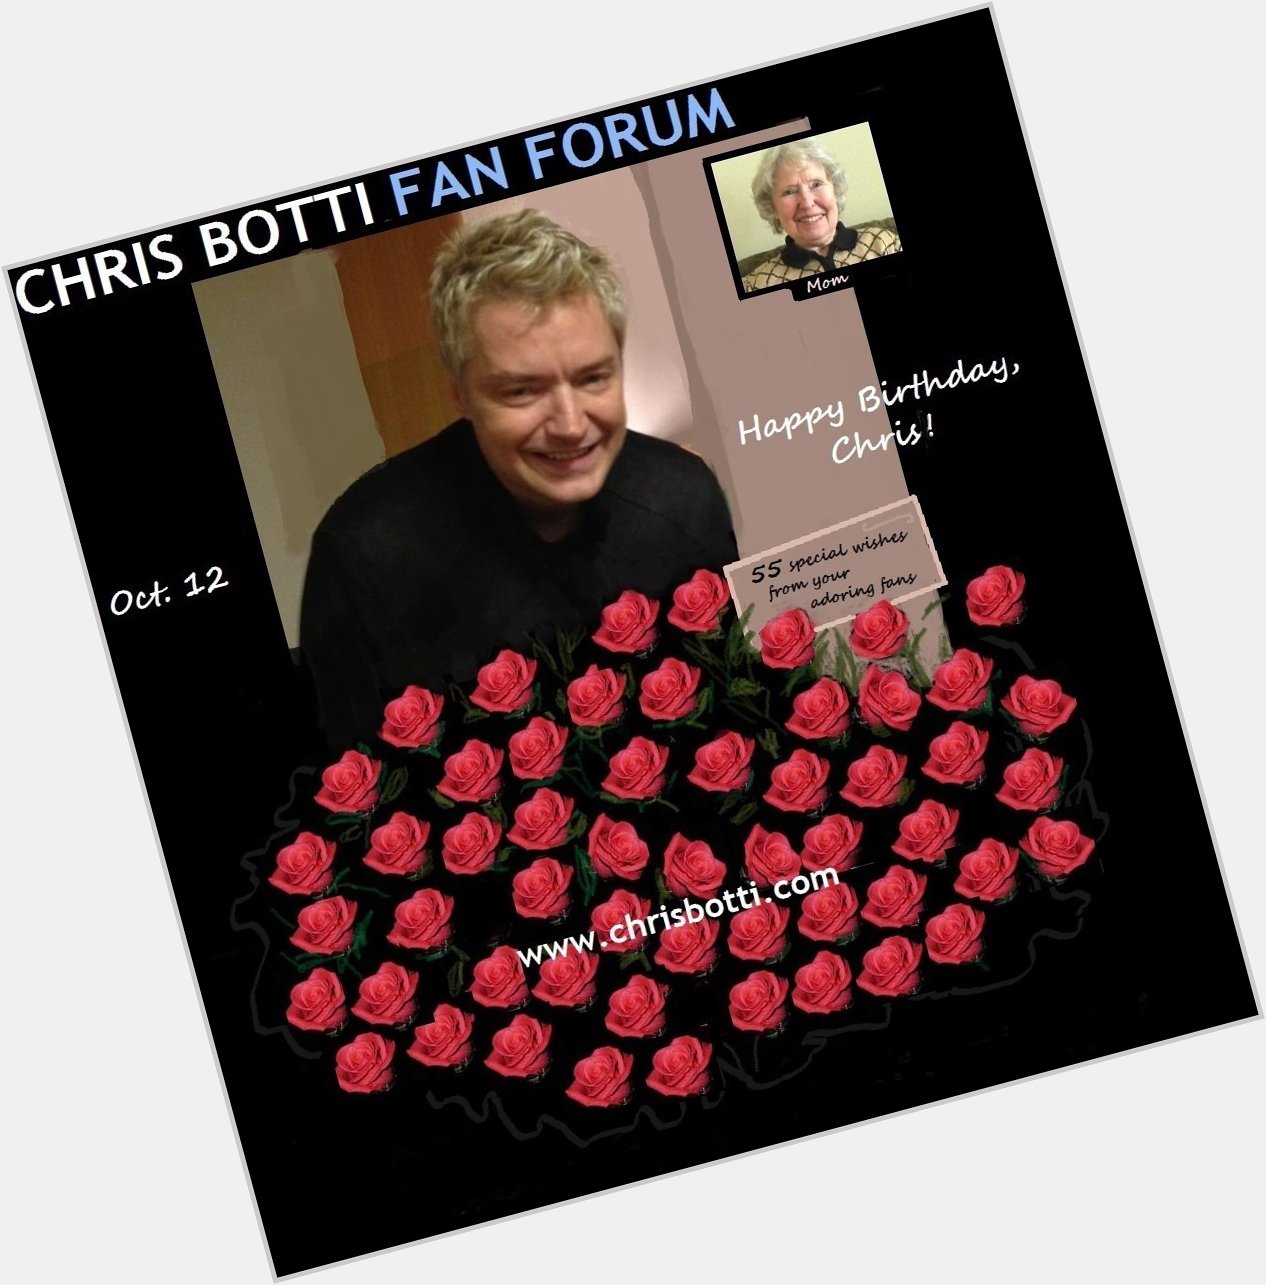 HAPPY BIRTHDAY, Chris Botti! From your Chris Botti Fan Forum!  